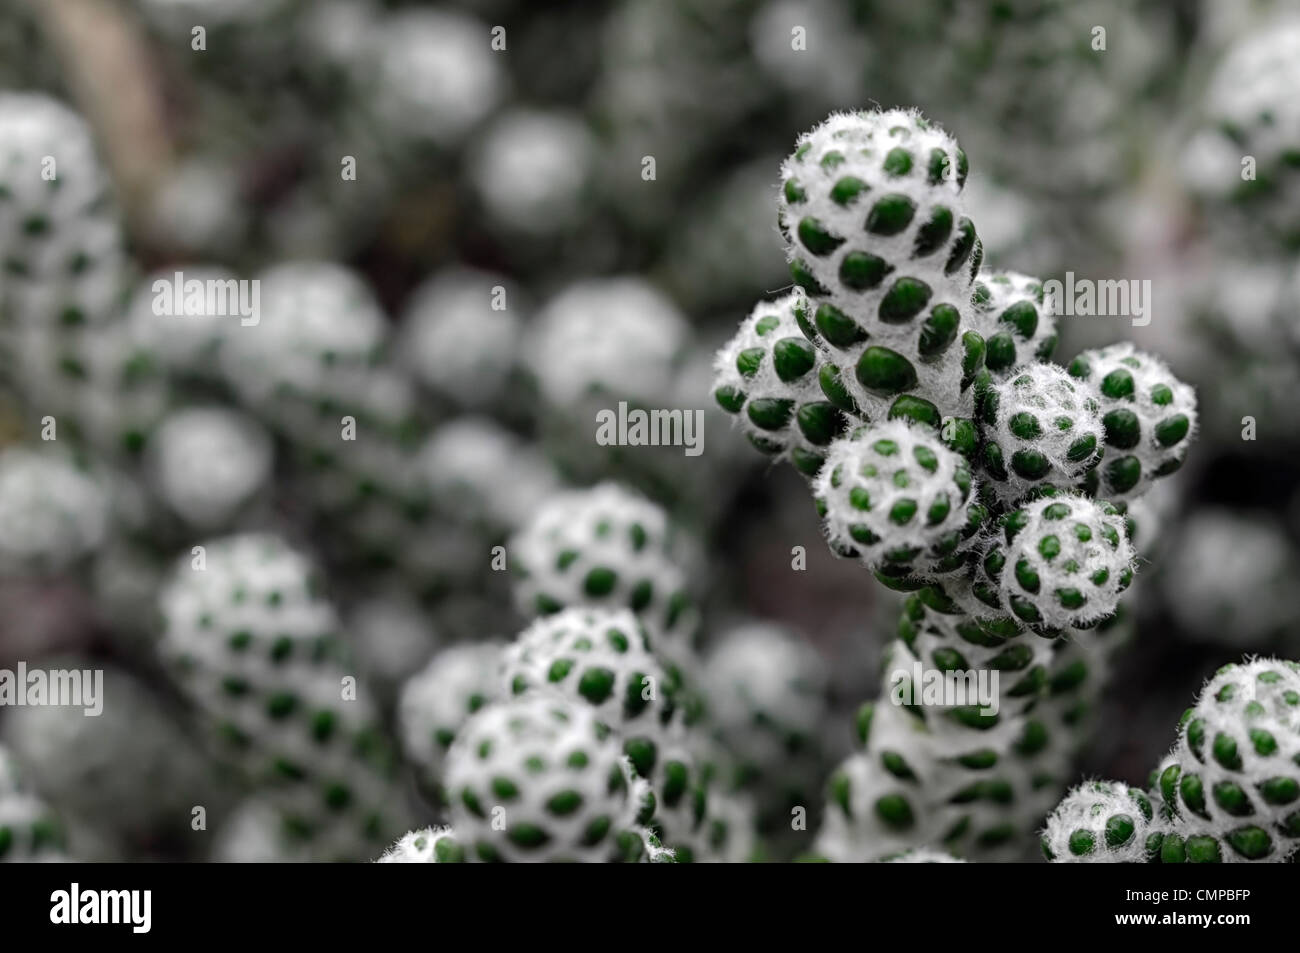 Ozothamnus Coralloides Agm Immergrün immergrüne Sträucher Pflanzen Porträts Closeup selektiven Fokus silbernes grauen Laub Blätter Stockfoto